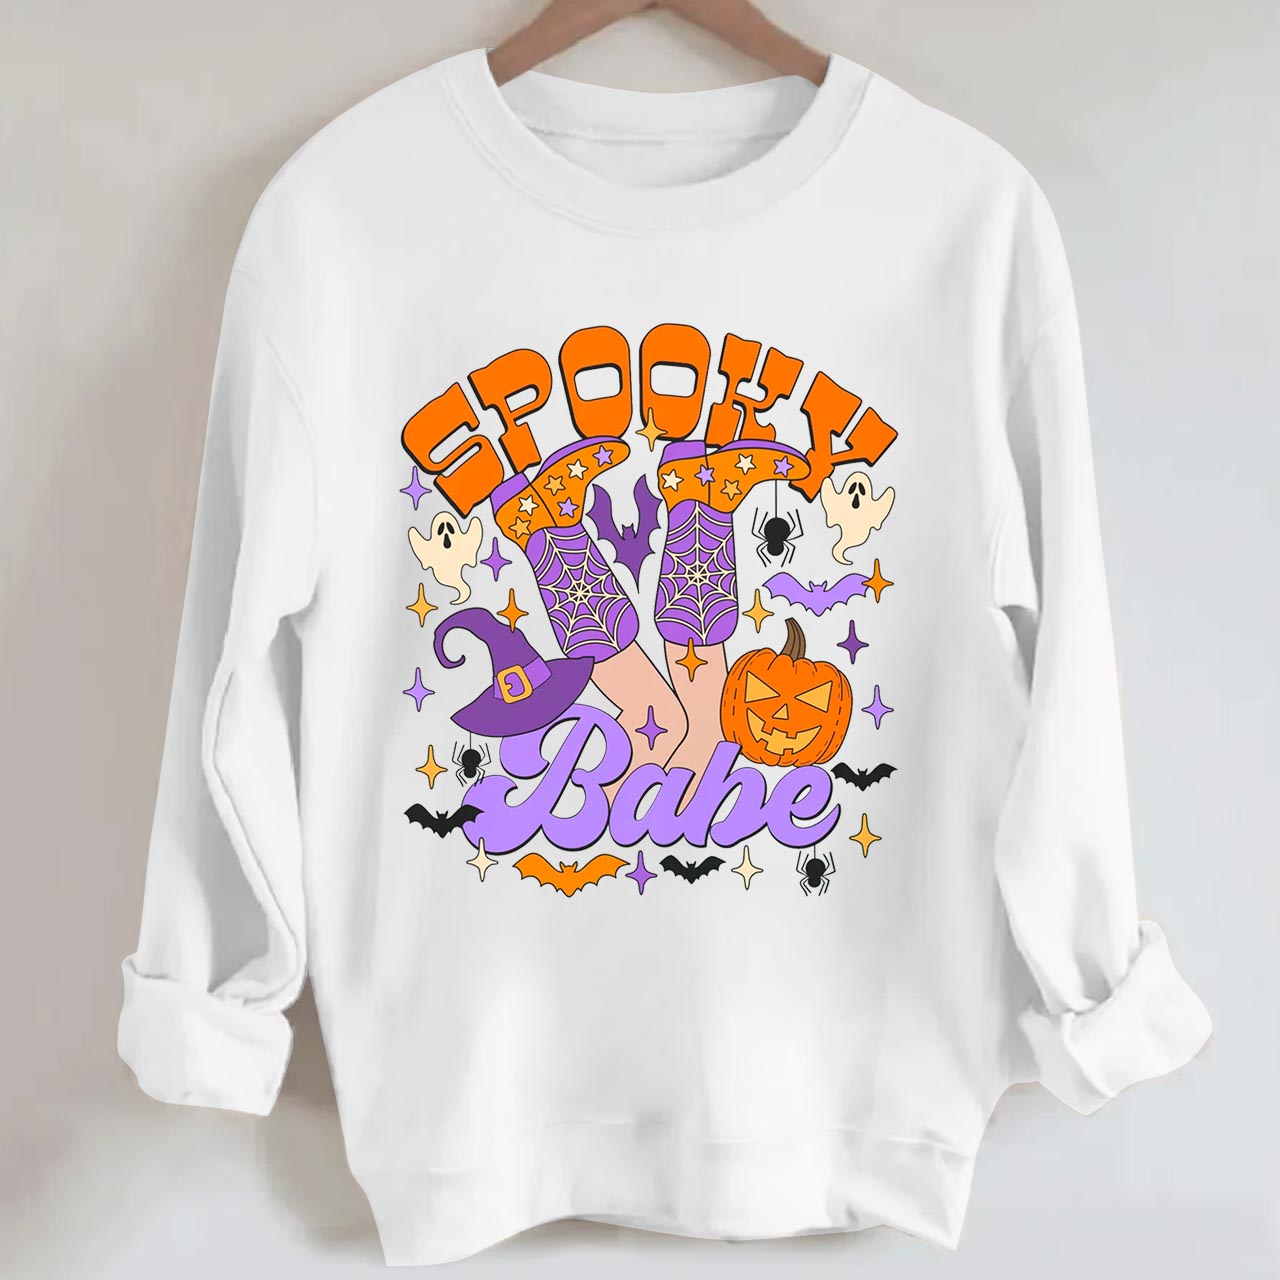 Spooky Babe Halloween Sweatshirt